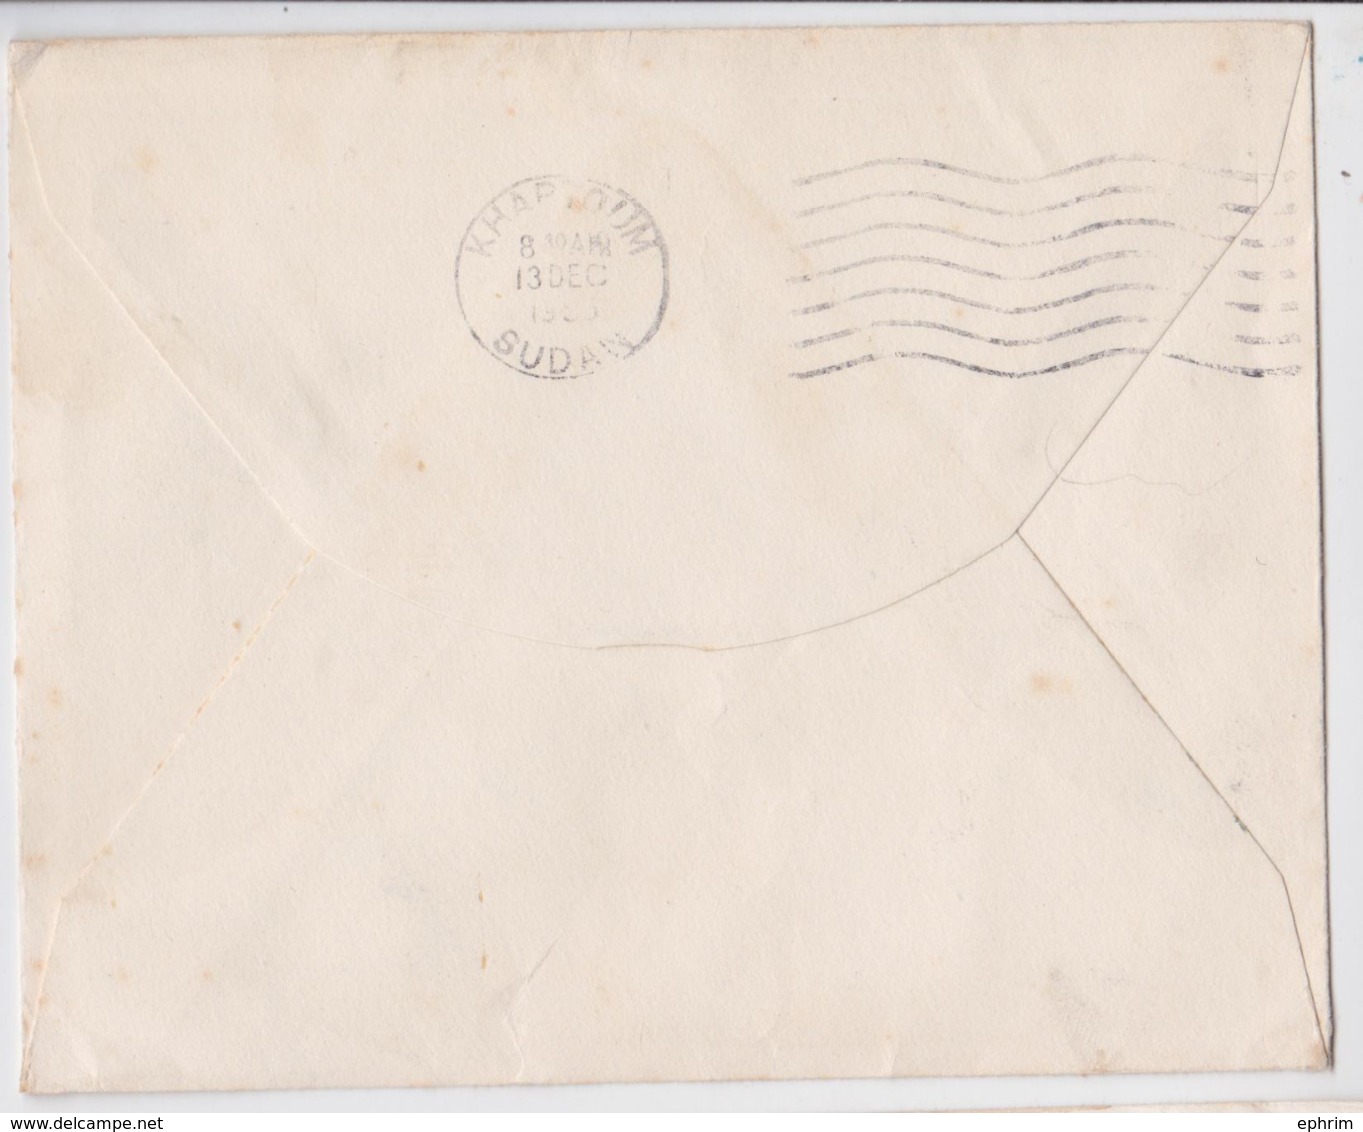 Sudan Stamp Khartoum Air Mail Cover To Middleton Lettre Timbre Soudan - Sudan (1954-...)